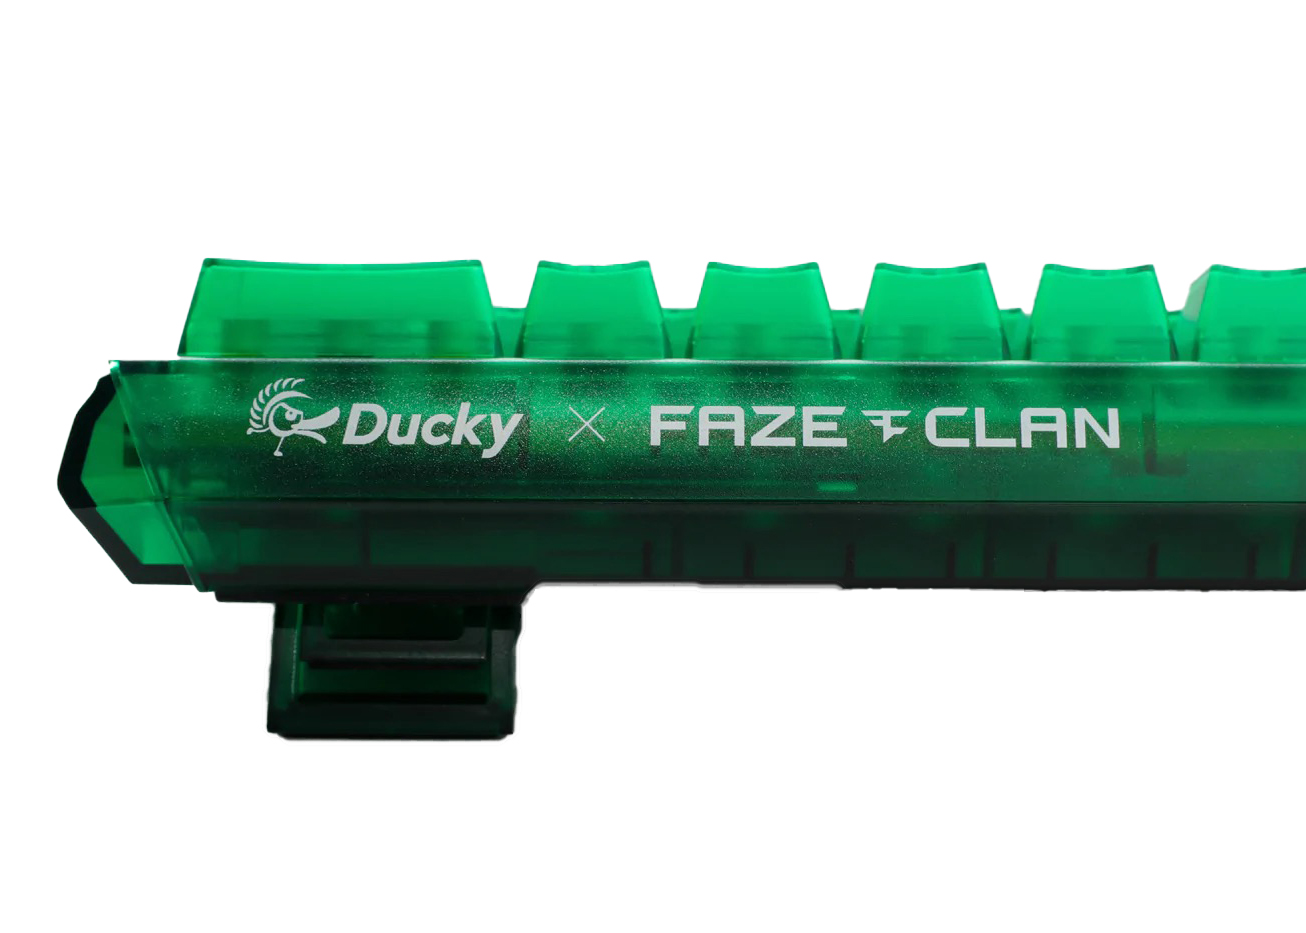 Ducky one 3 SF Faze clanコラボモデル - PC周辺機器